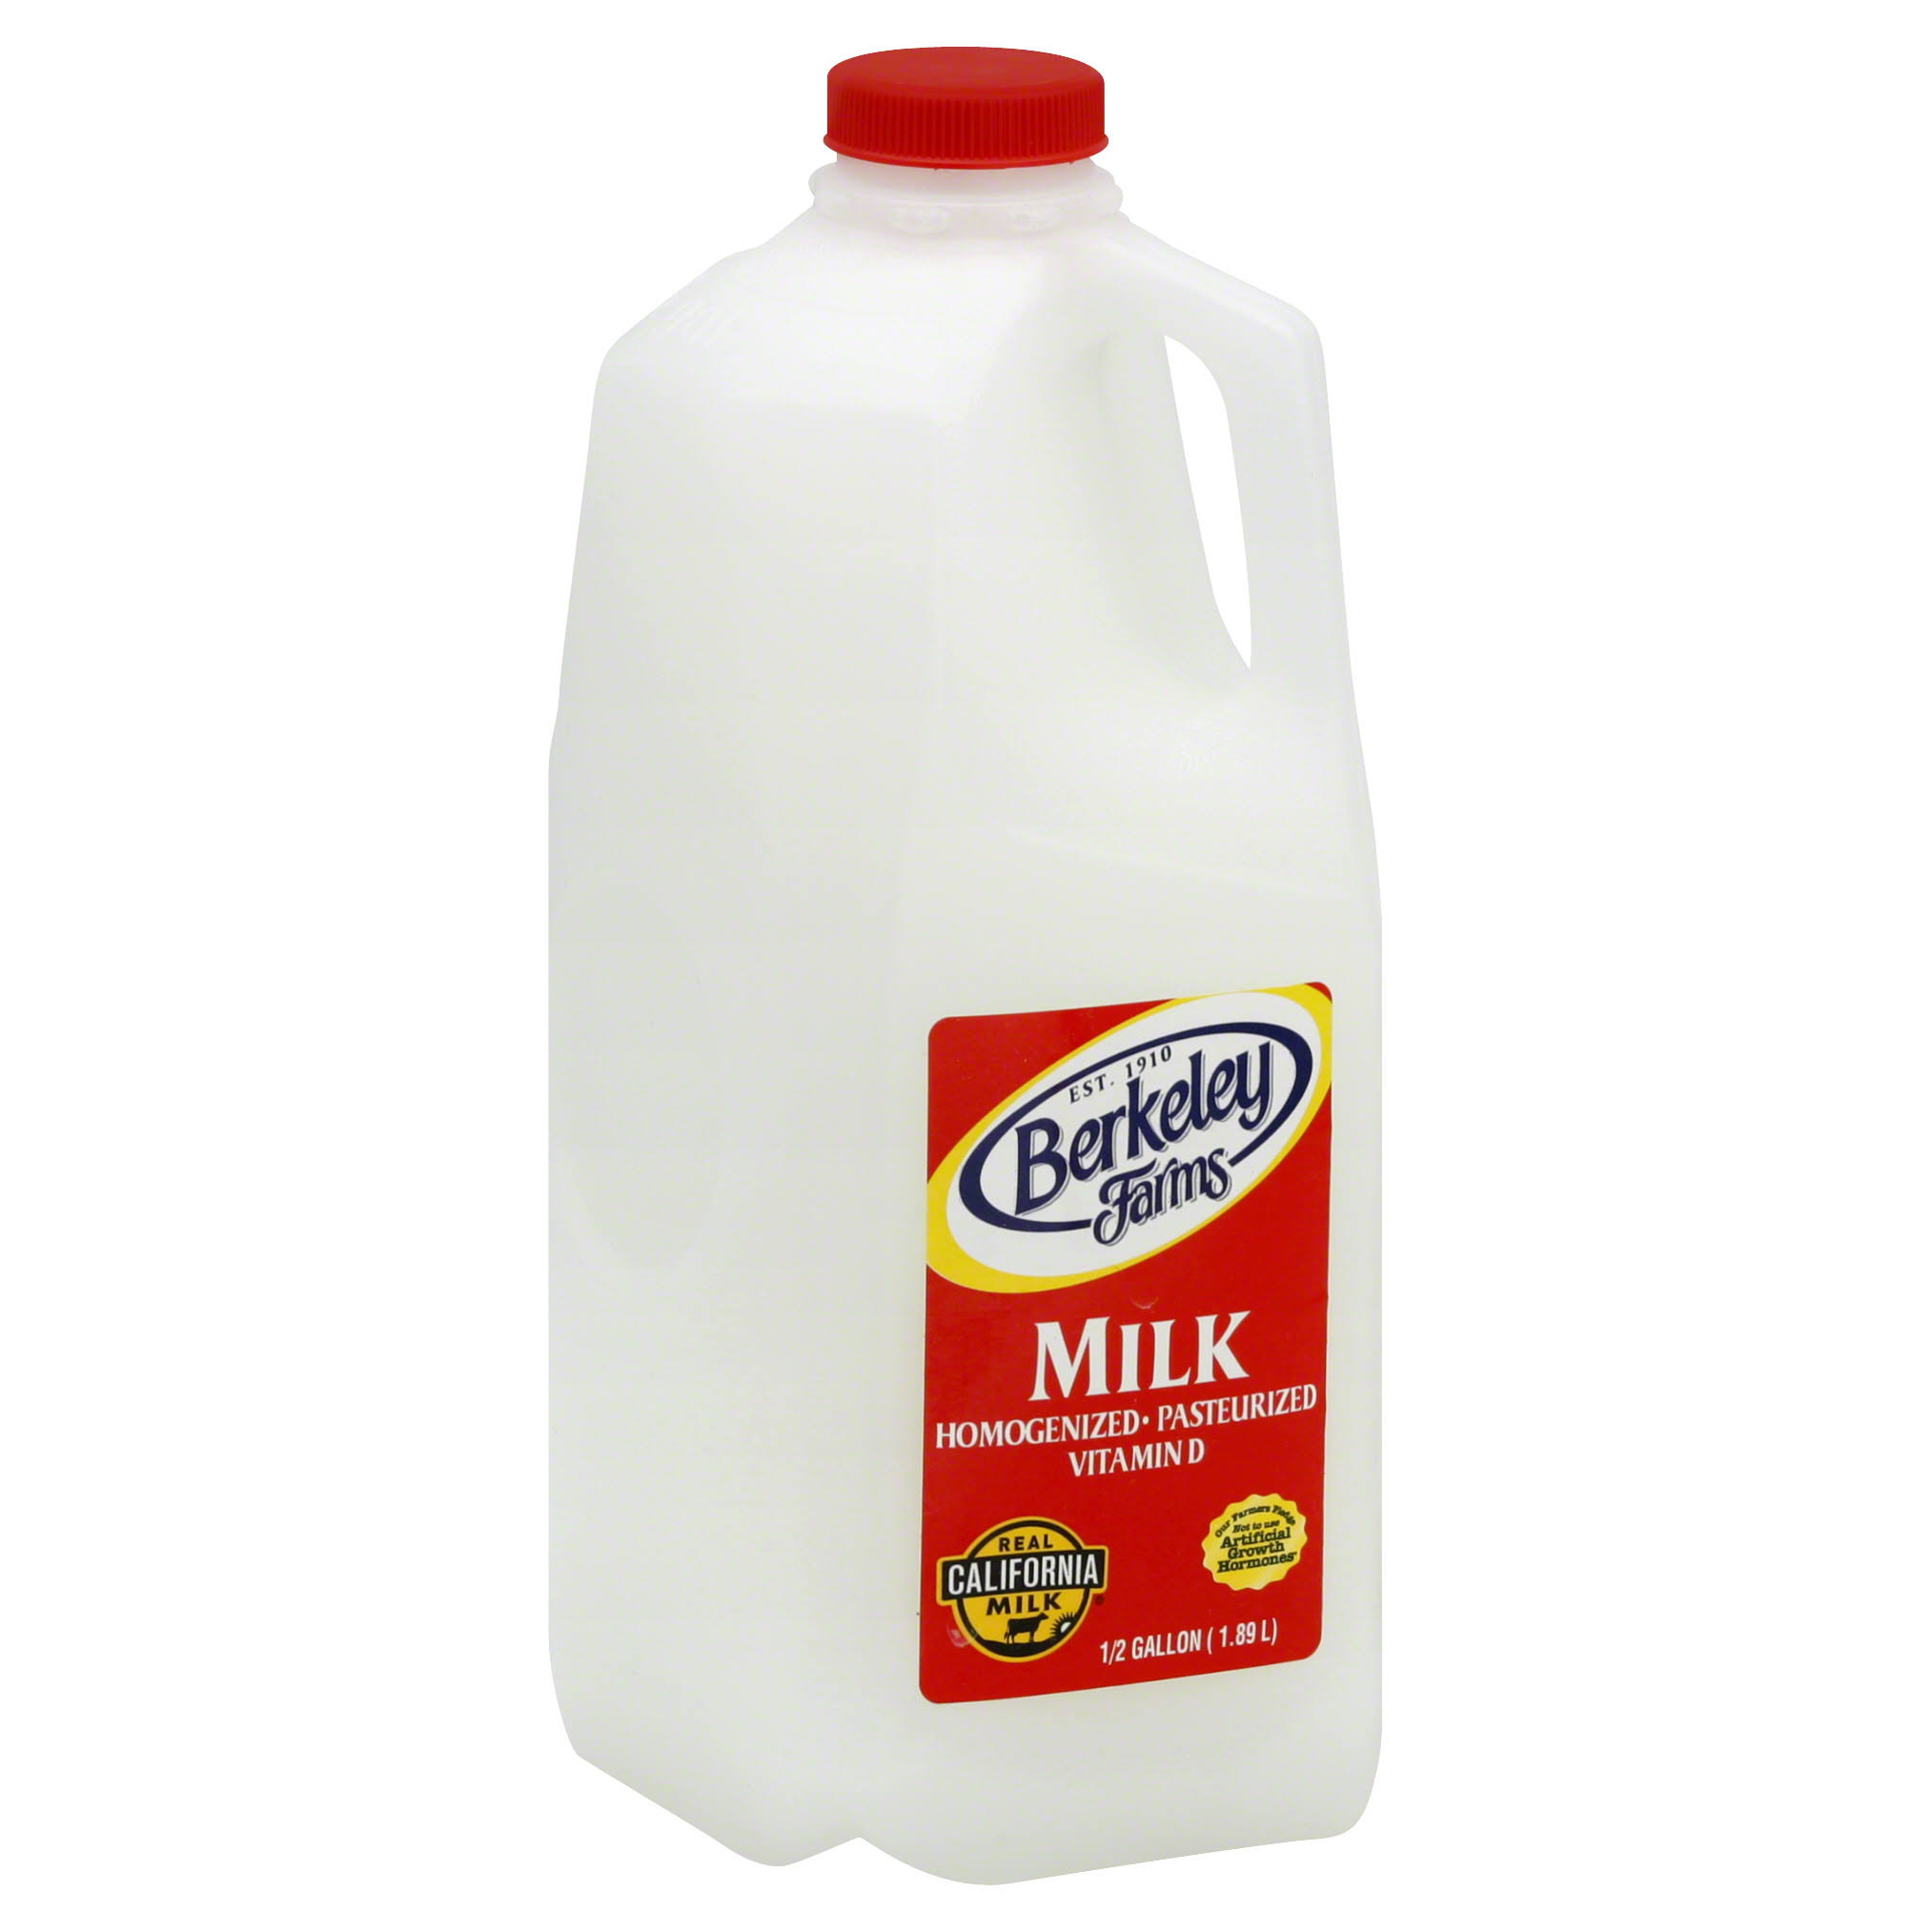 Berkeley Farms Milk - 0.5 gl (1.89 lt)